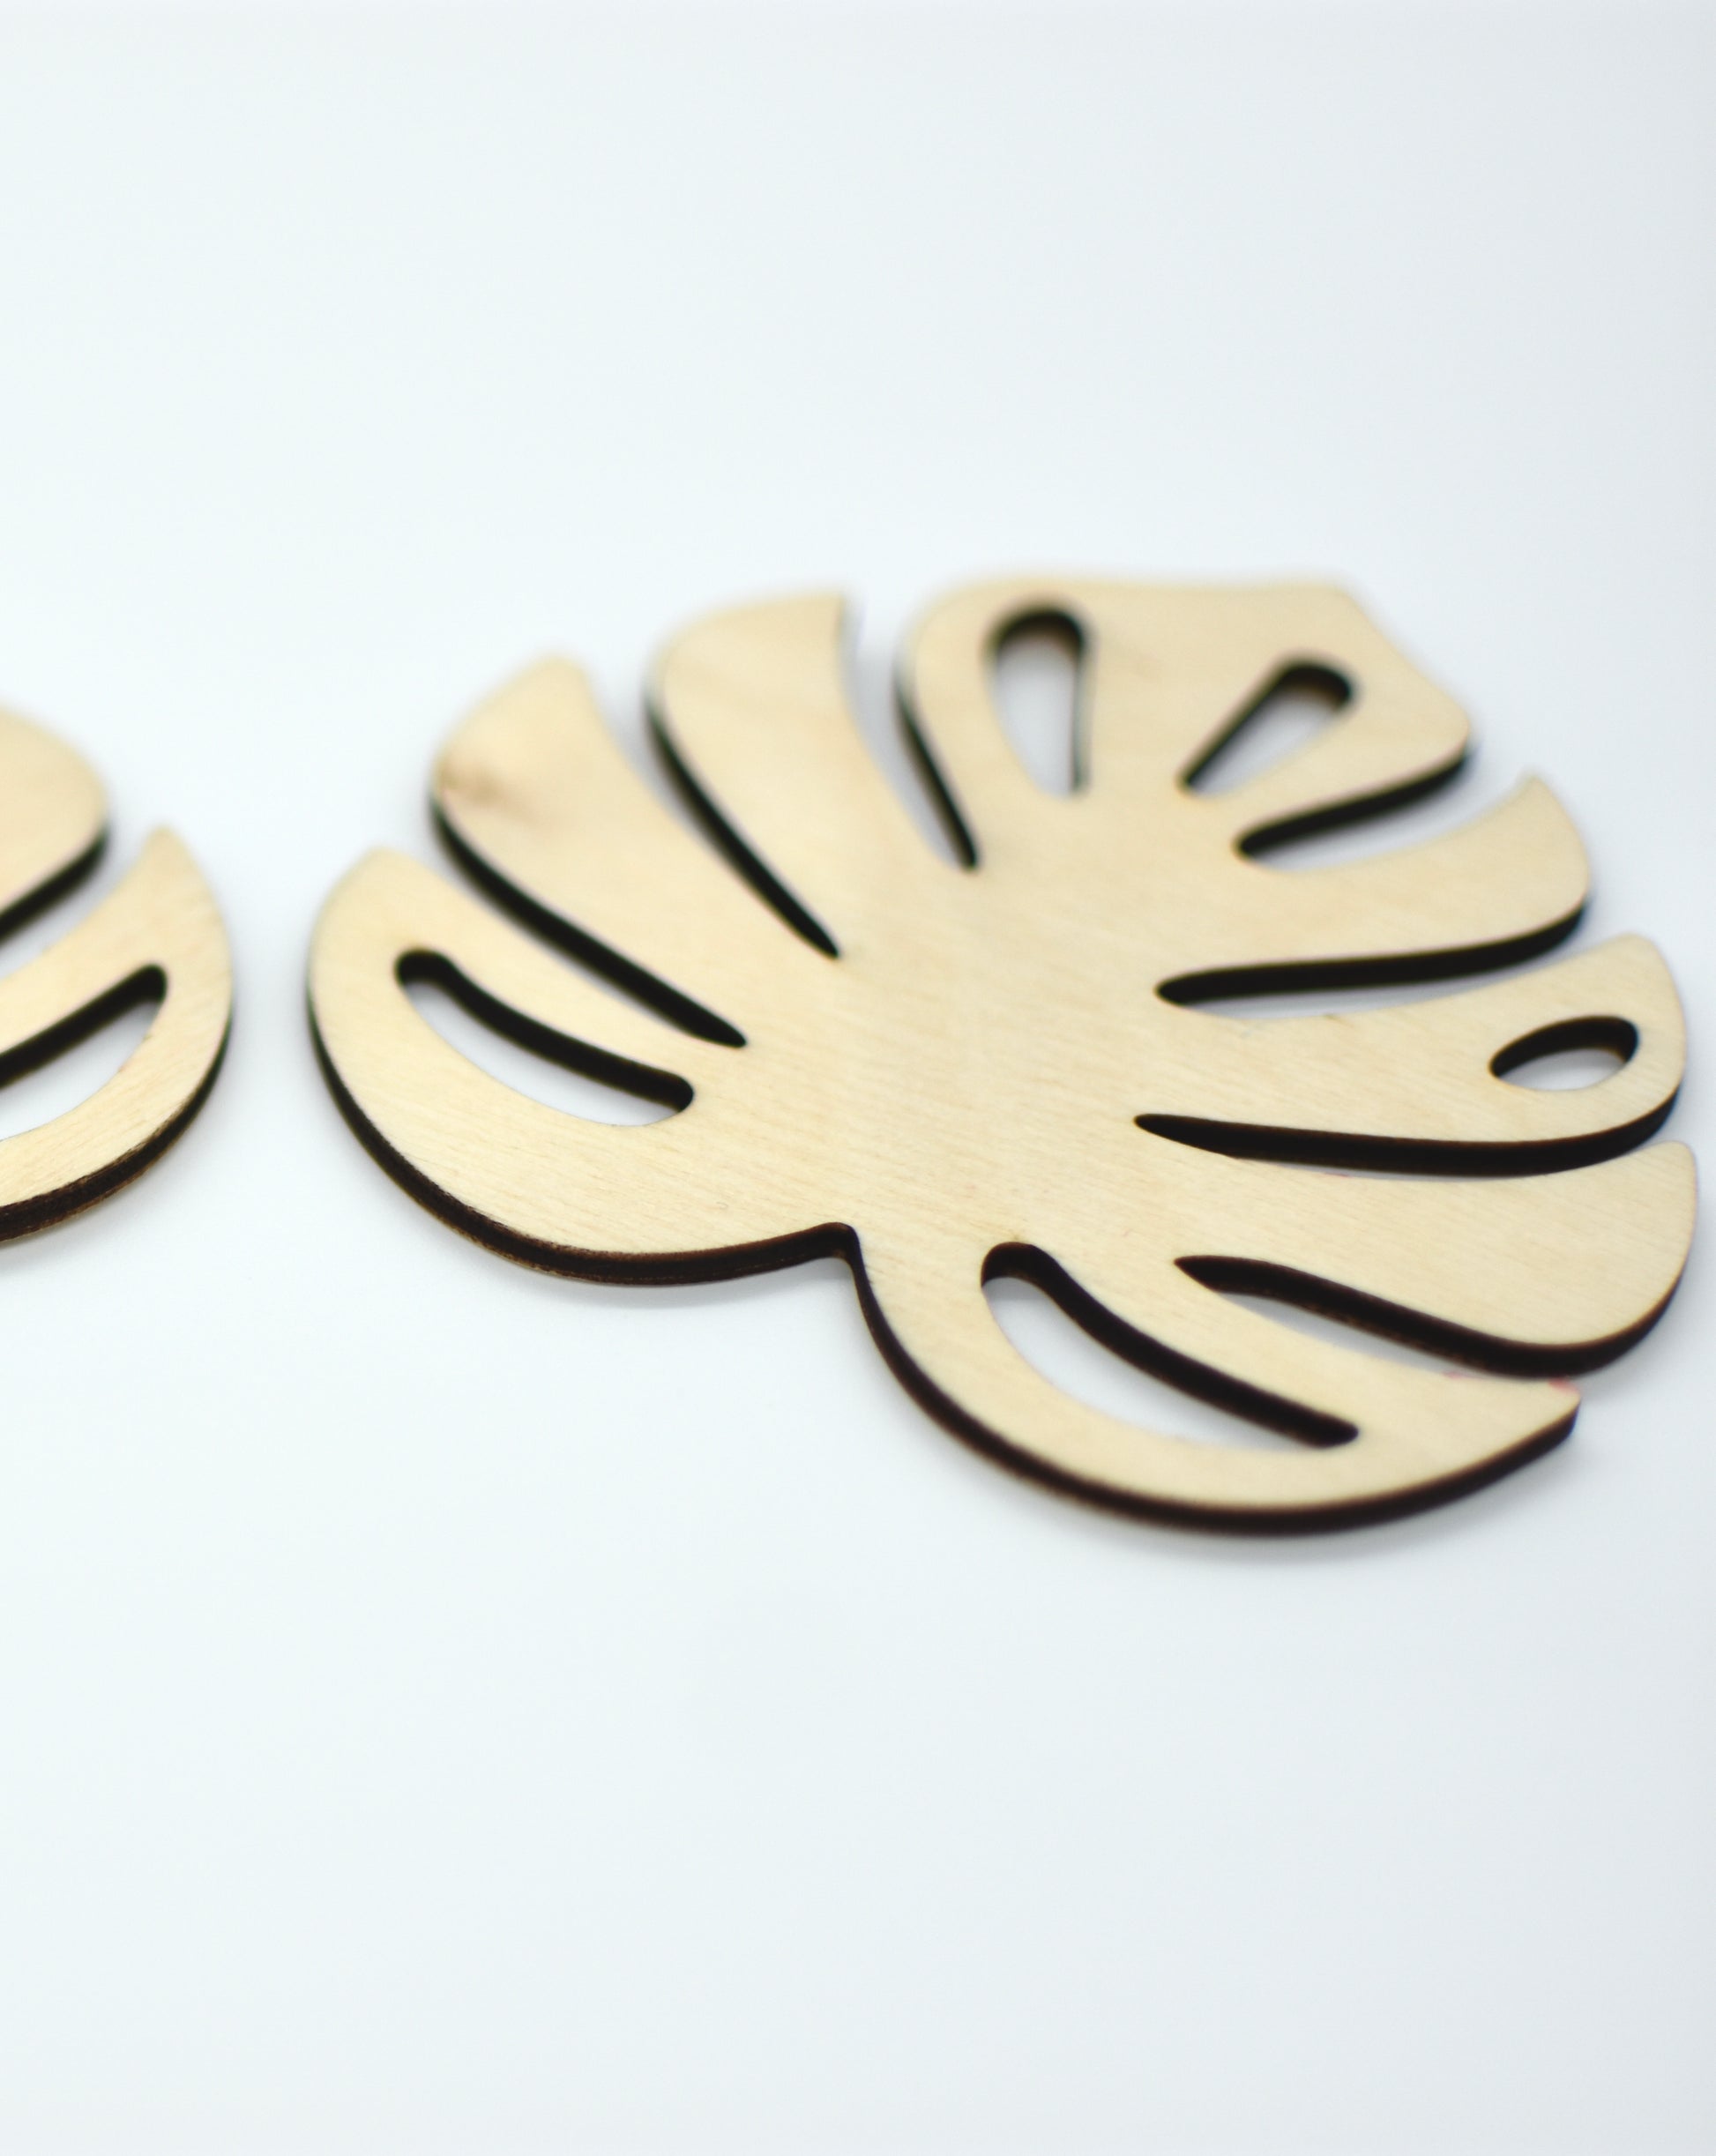 Monstera Leaf Wood Coasters - Set of 6 - HappyBundle